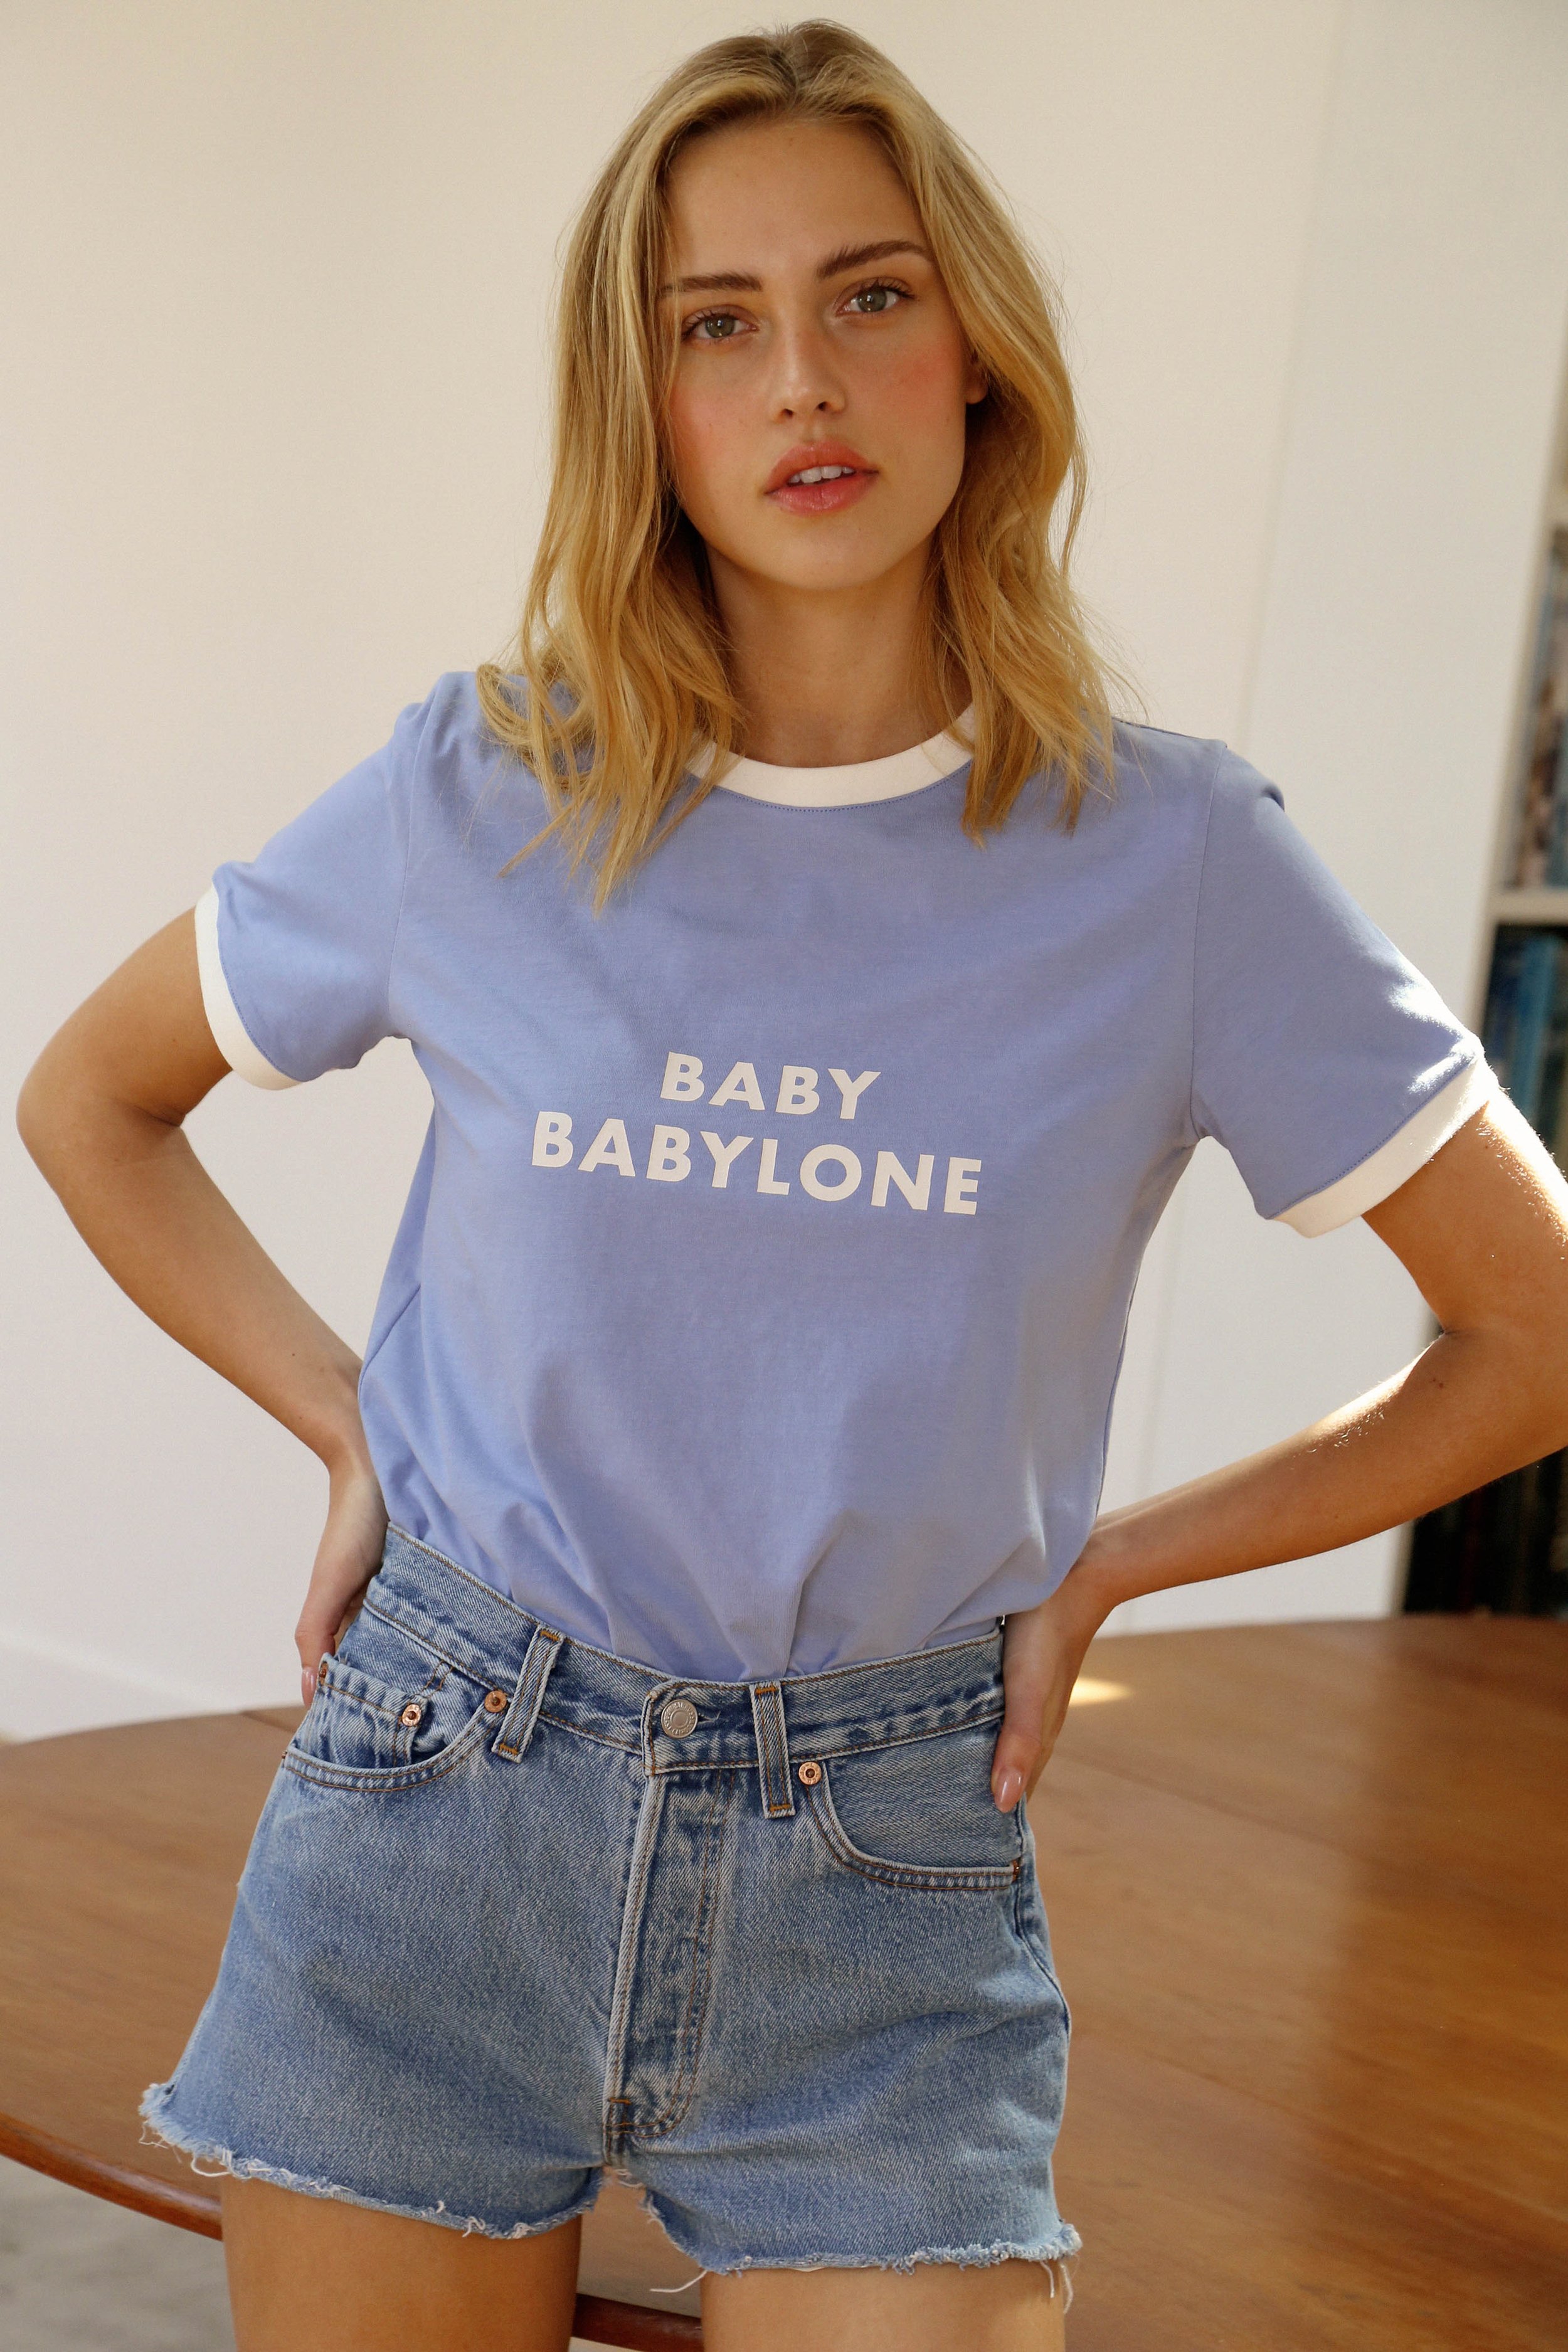 BABYLONE / Tシャツ